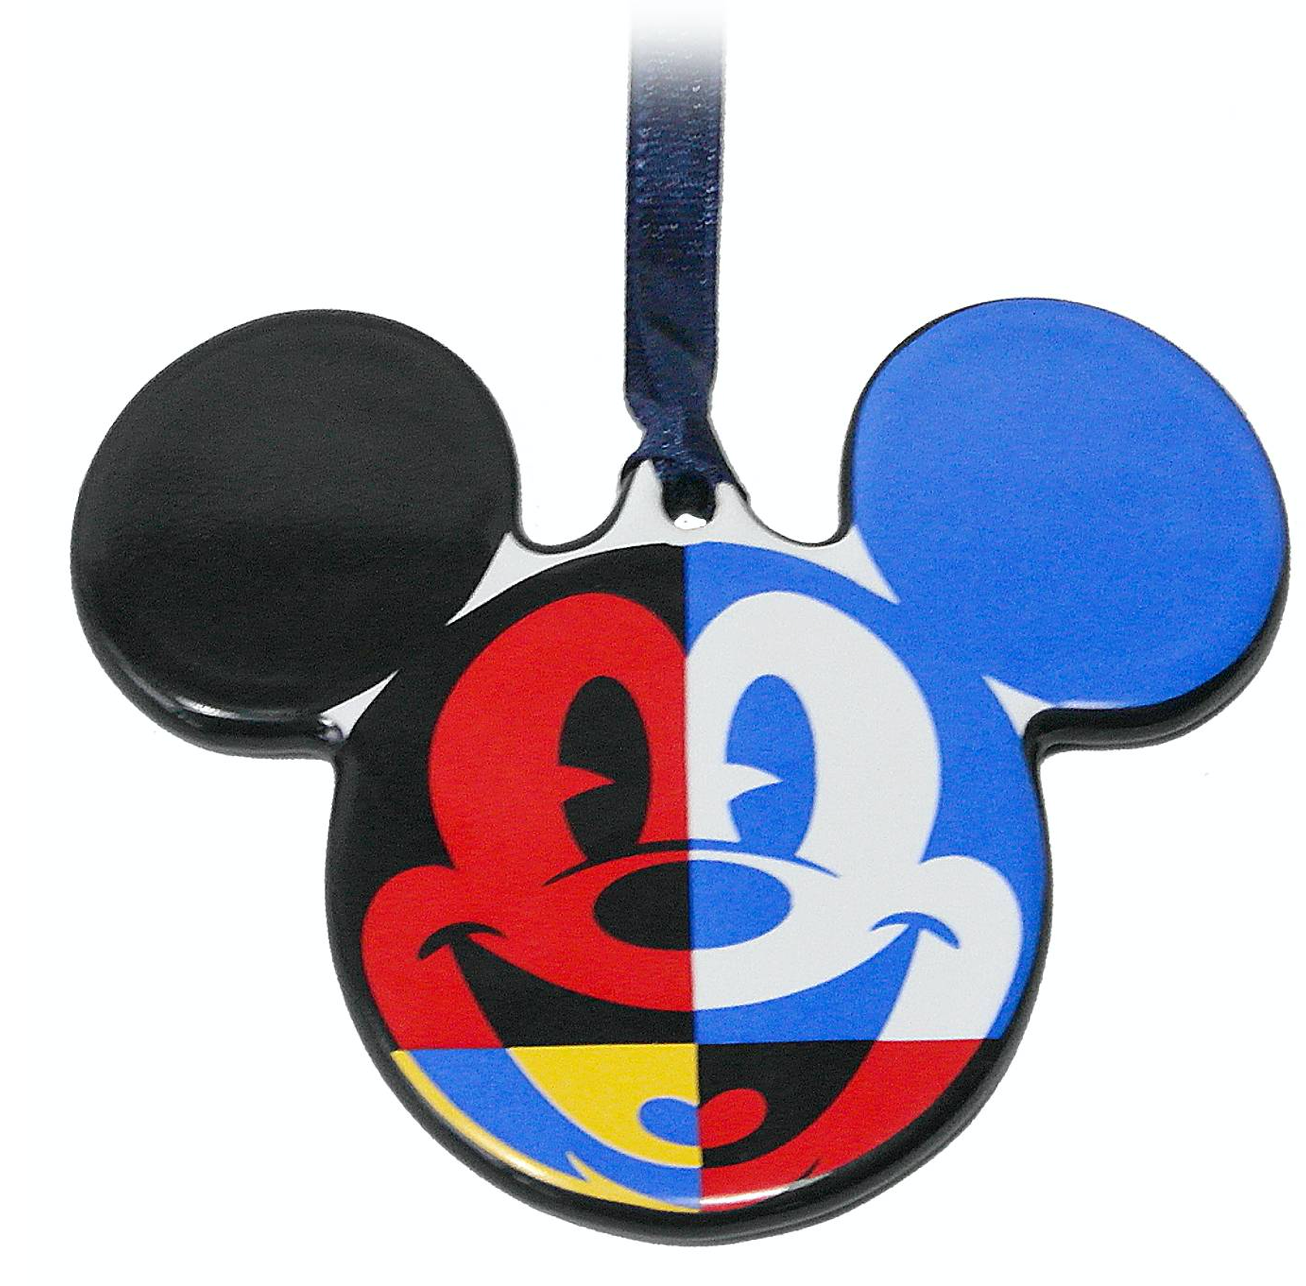 Disney Parks Disneyland 2021 Mickey Disc Ceramic Christmas Ornament New with Tag